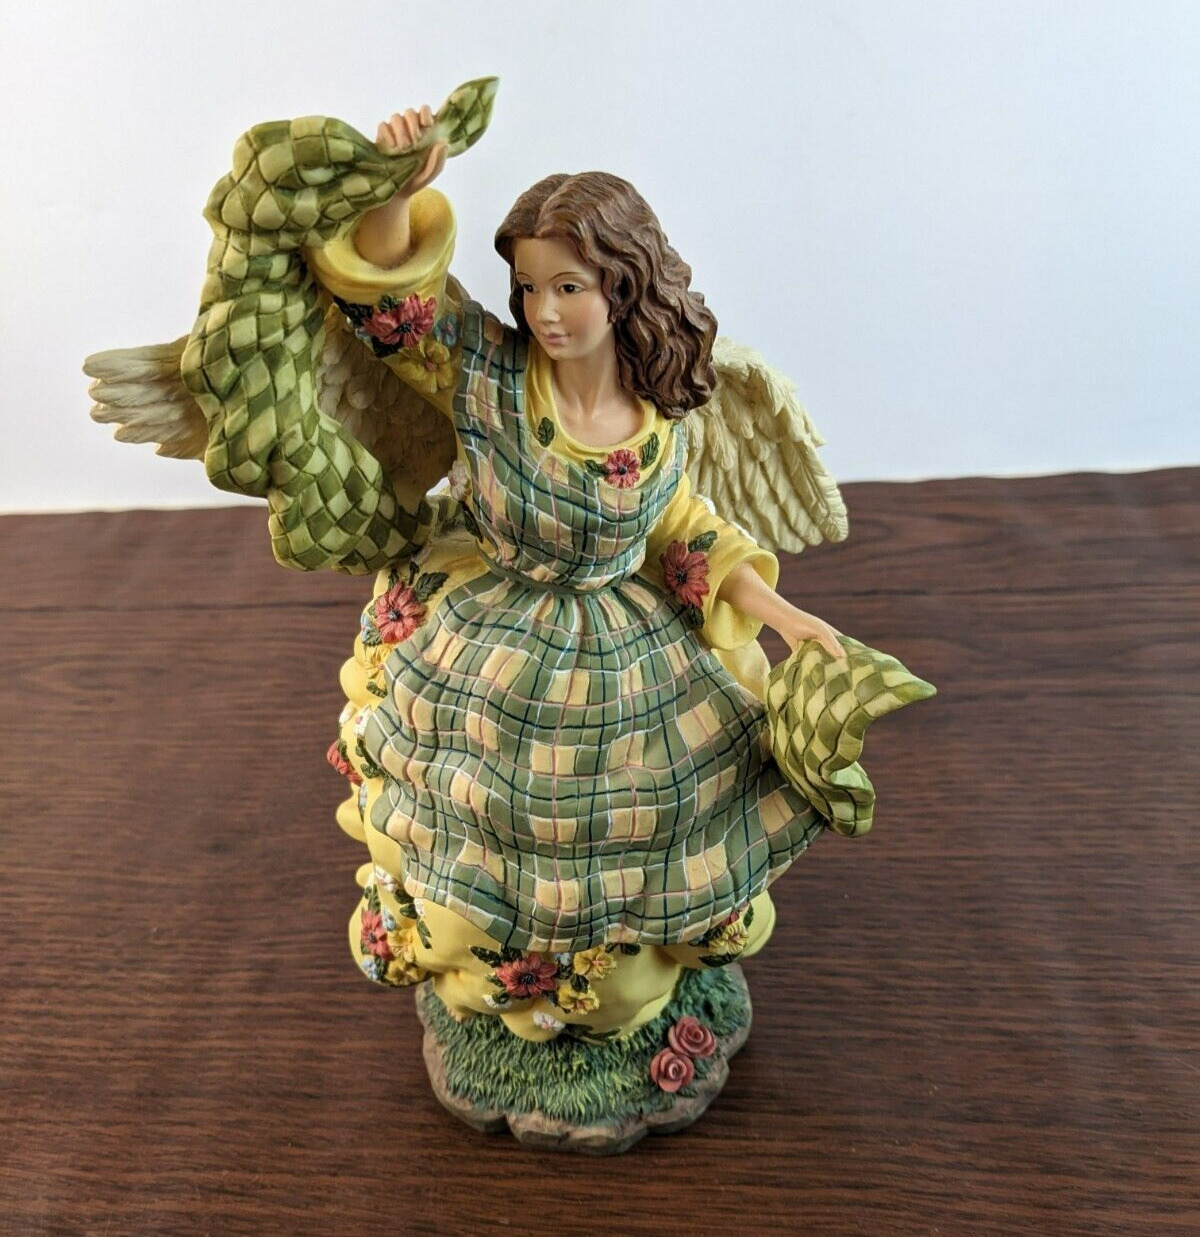 Pipka Earth Angels - 1996 Cottage Angel - LE 1268/5400 - Angel Figurine #13800